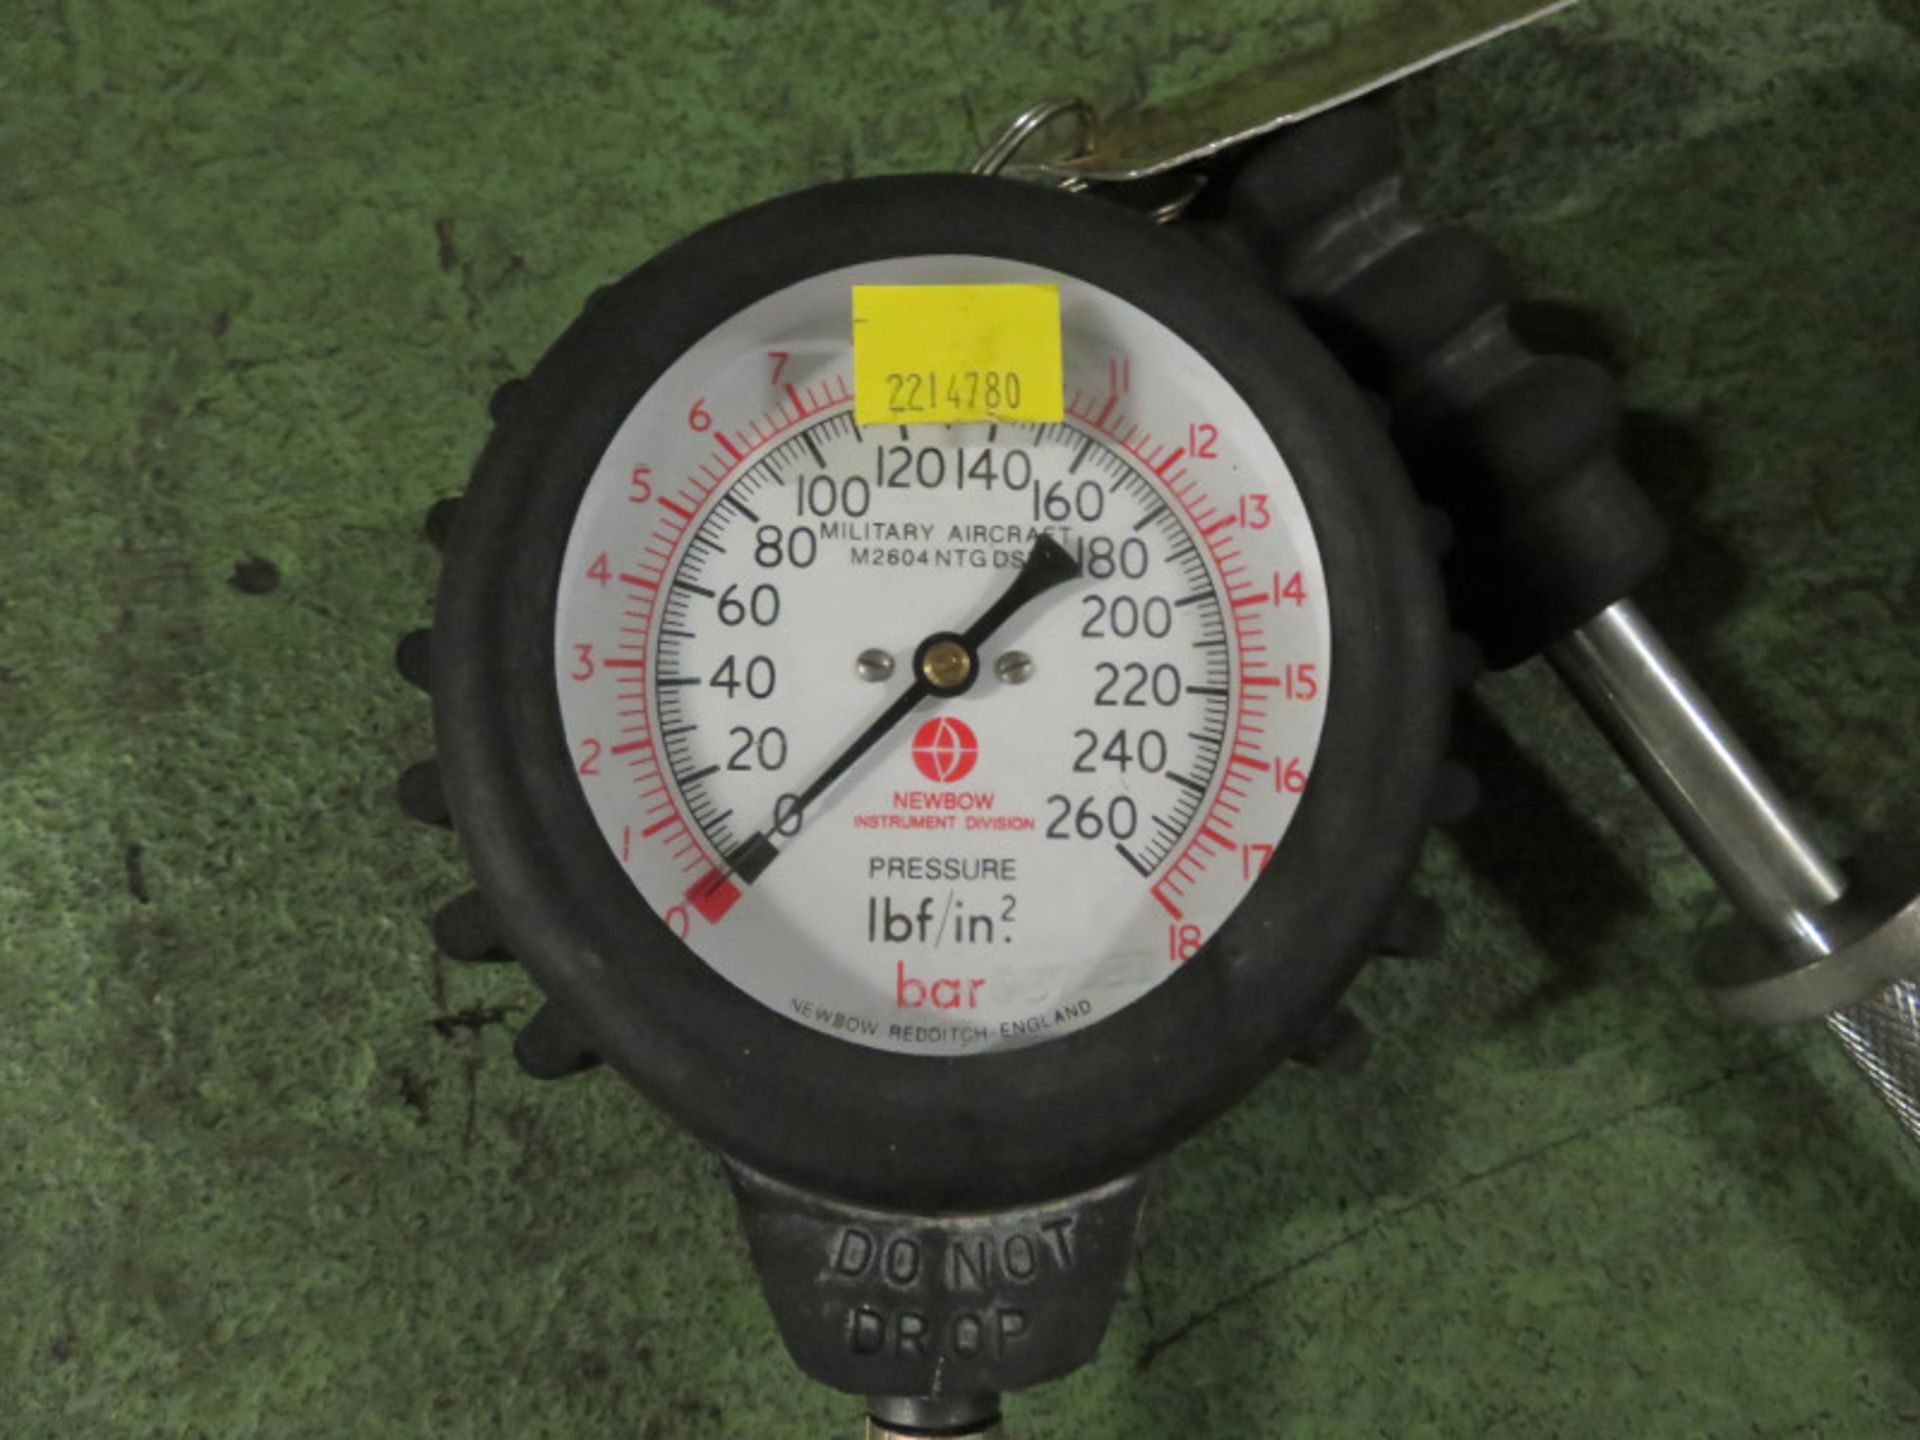 2x Newbow Tyre Pressure Gauges 0-260lbs/in - Image 2 of 3